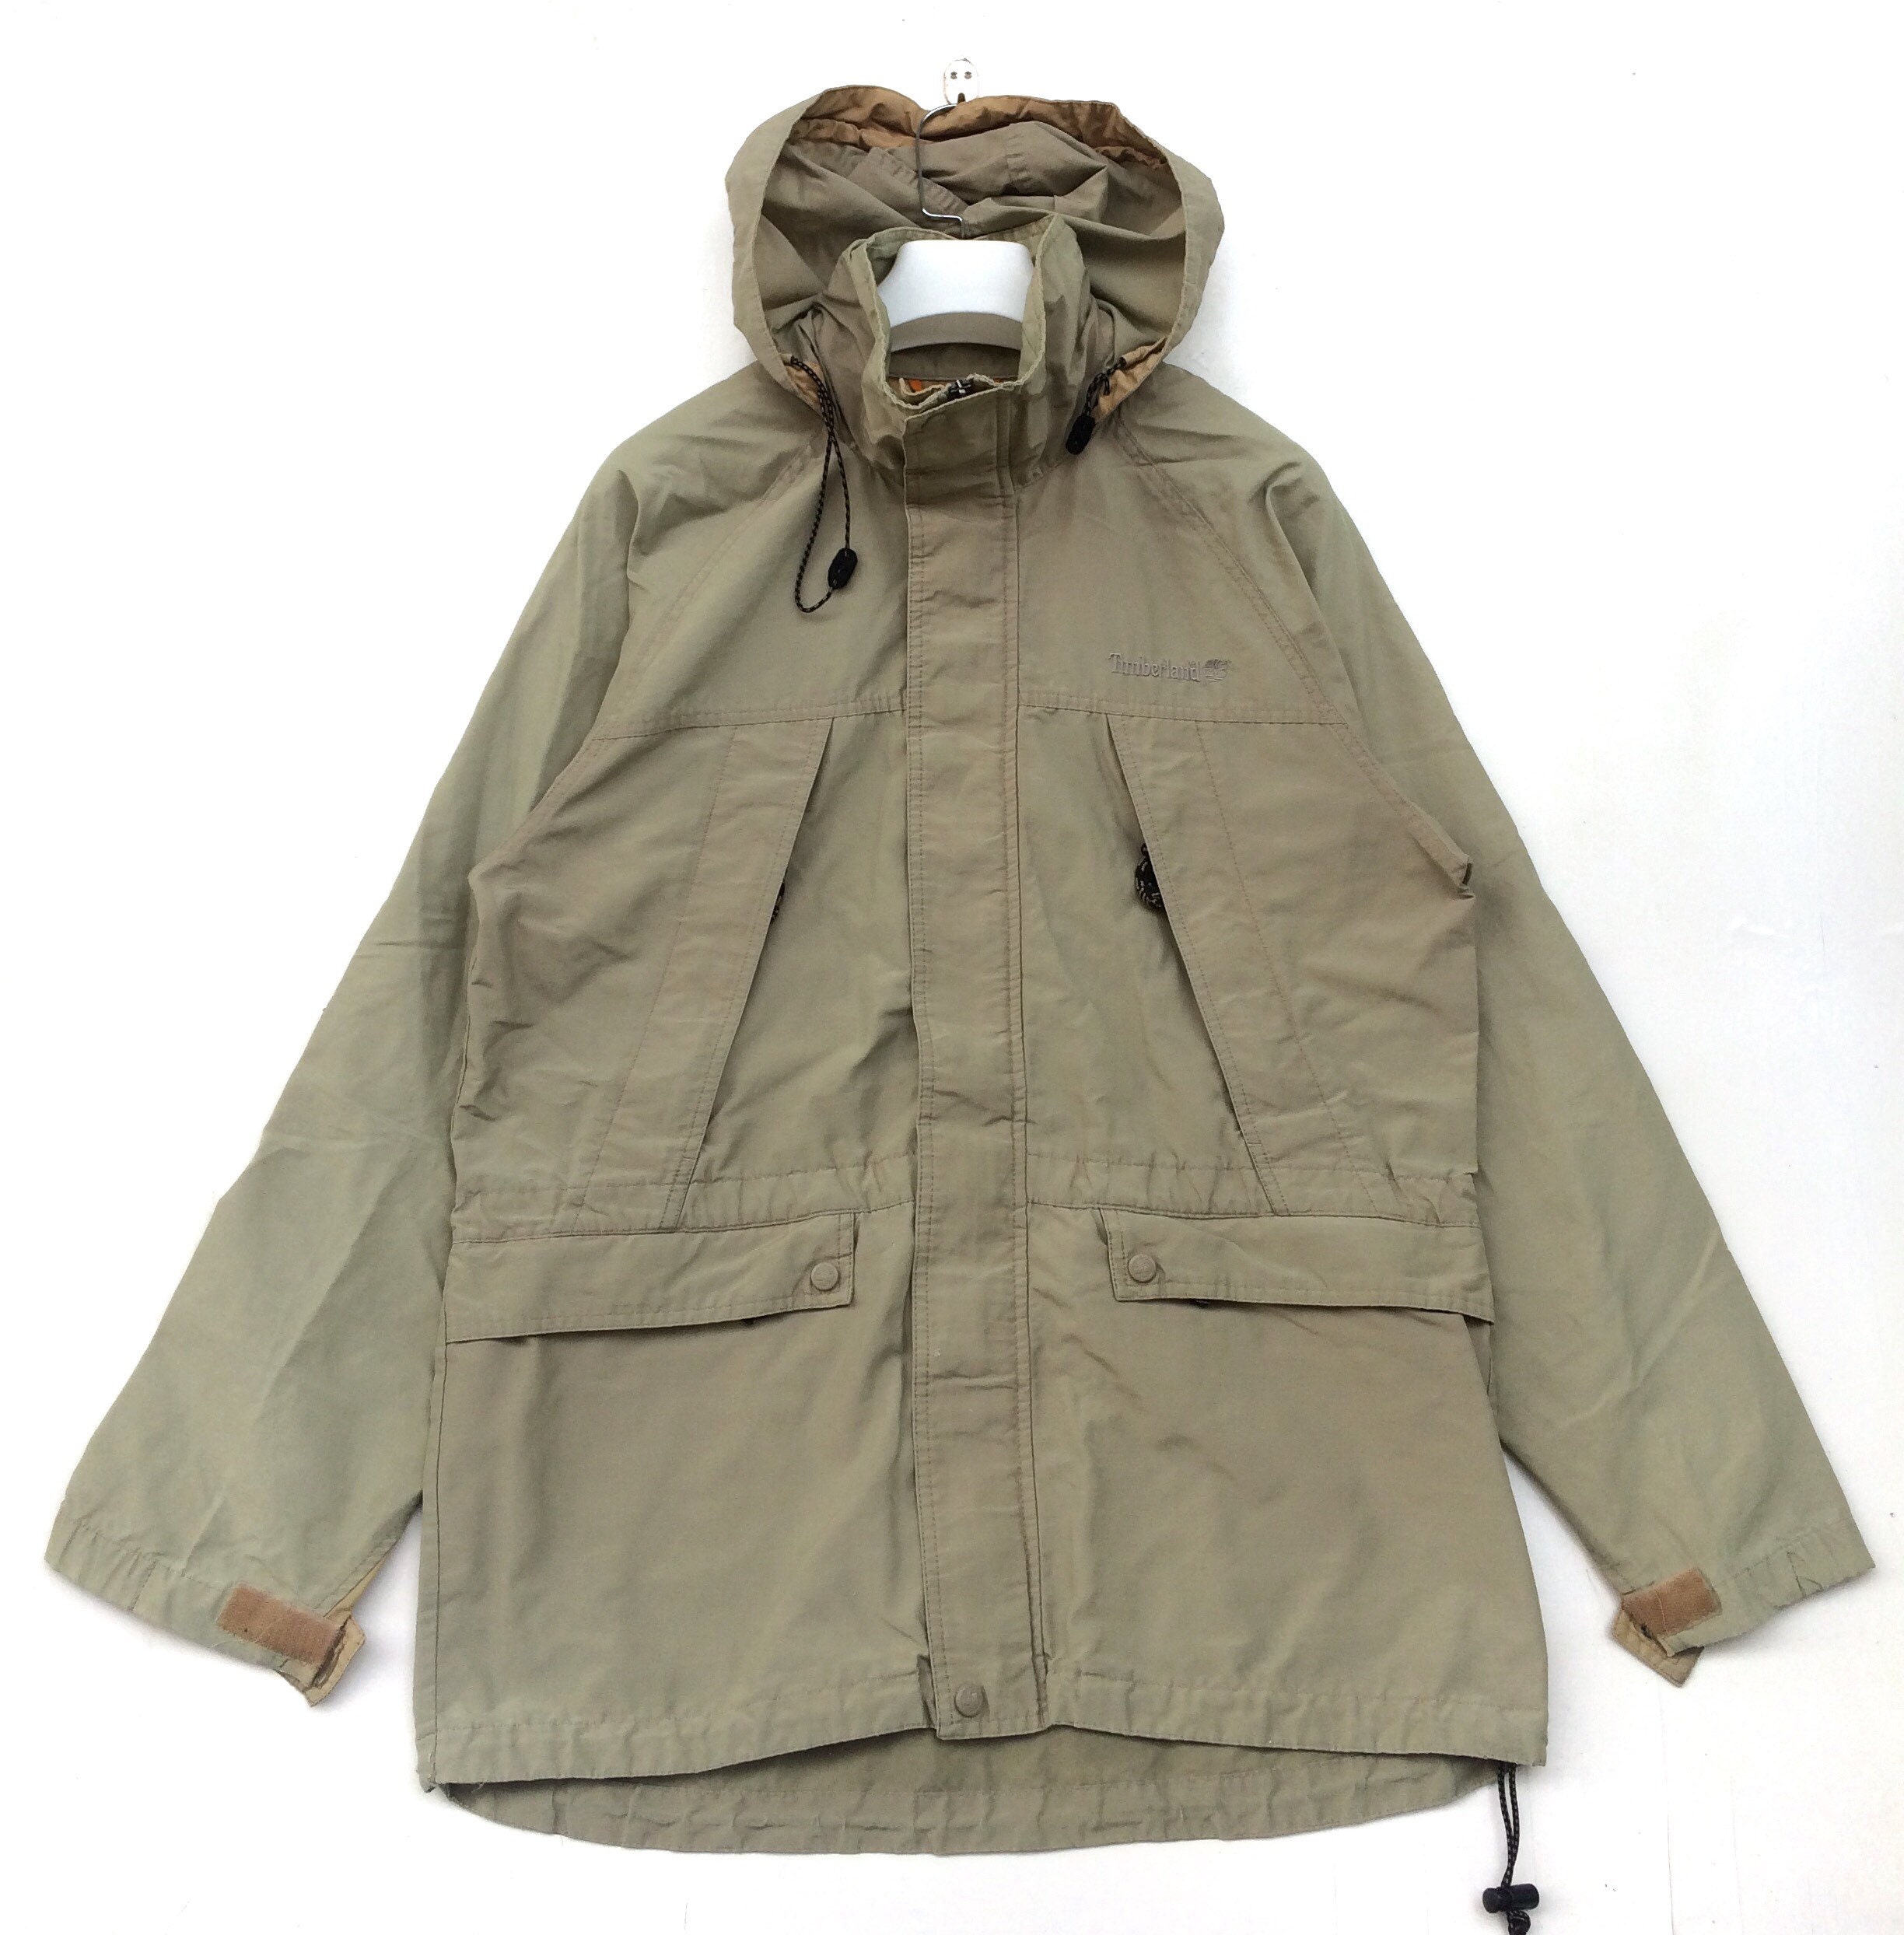 Rare Timberland weathergear parka jacket hoodies S size | Etsy